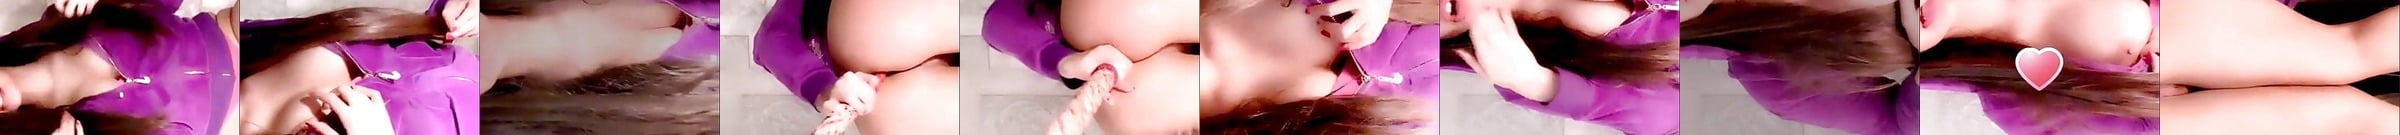 Saudi Girl Sex Story On Tango Live Private Free HD Porn 7b XHamster